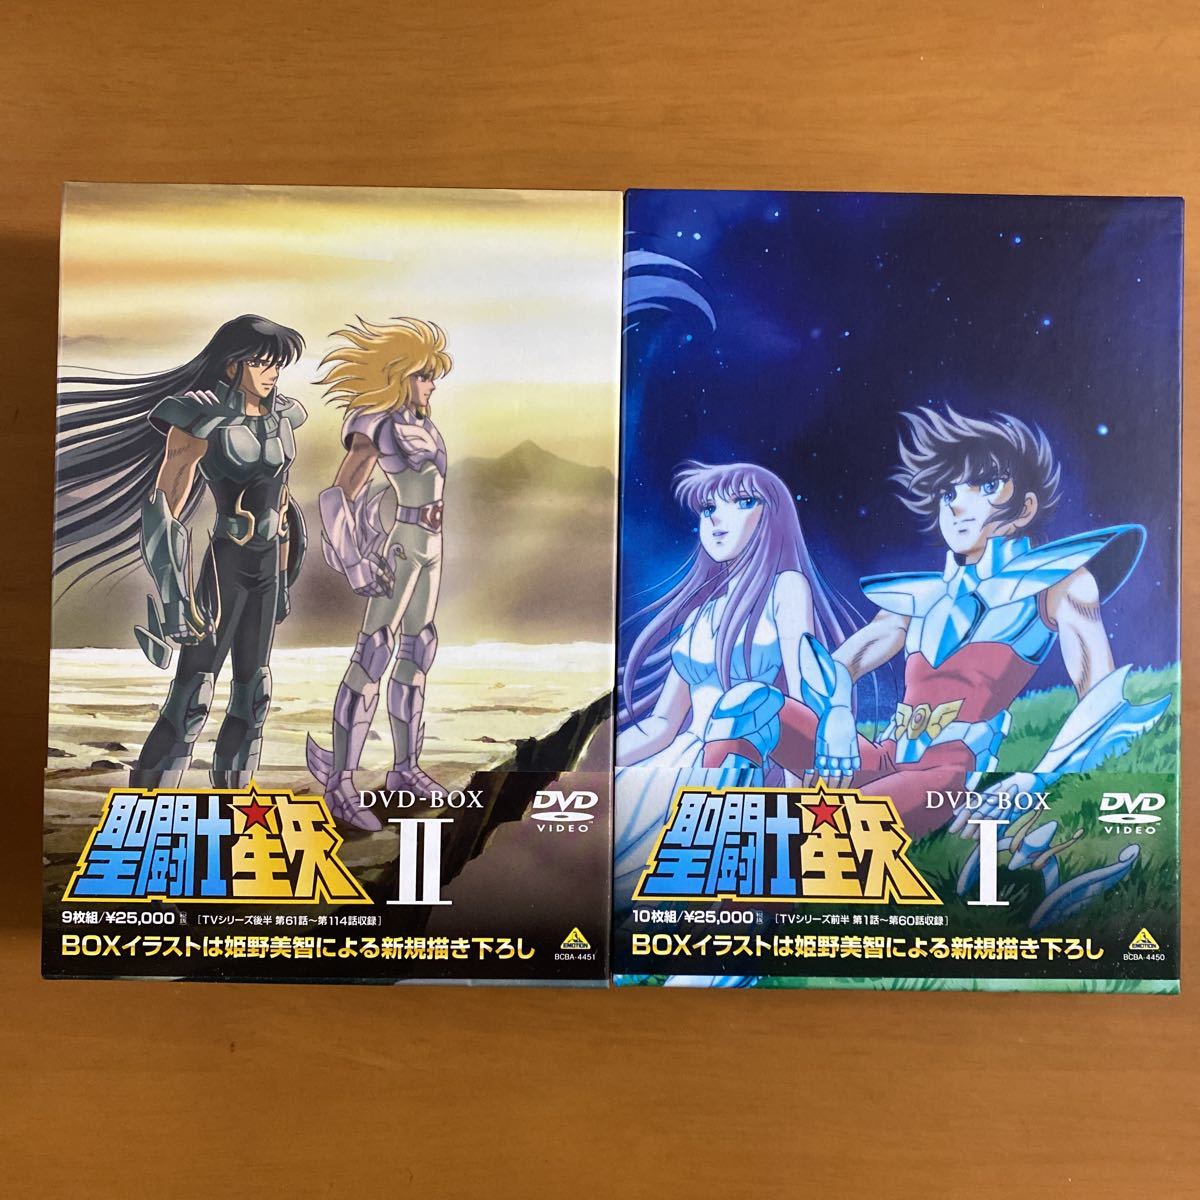 聖闘士星矢 DVD BOX１・２ セット tempusdecor.com.br